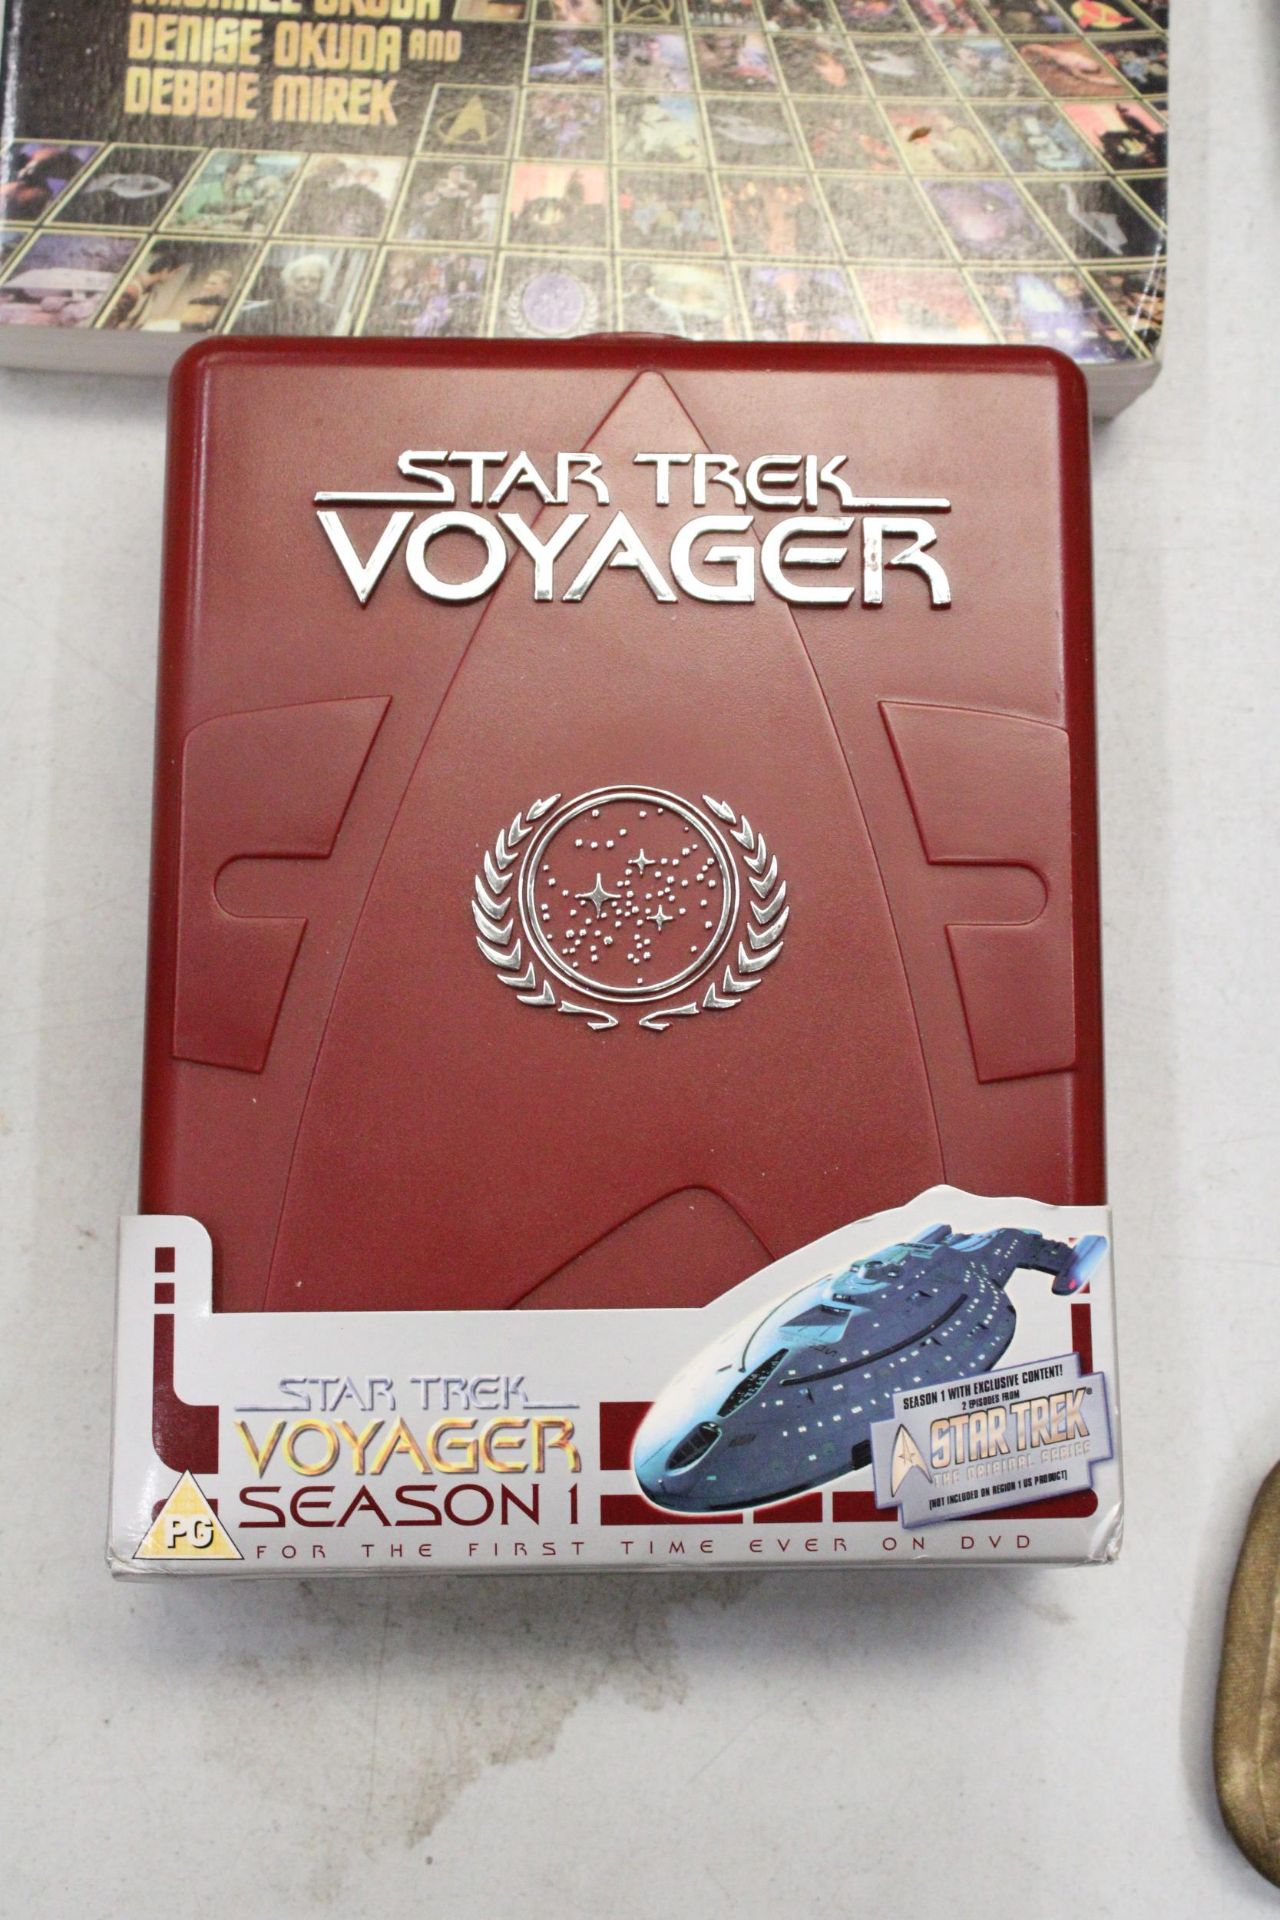 A LARGE STAR TREK ENCYCLOPEDIA AND SPECIAL PACK, SEASON 1, STAR TREK, VOYAGER DVD - Image 3 of 6